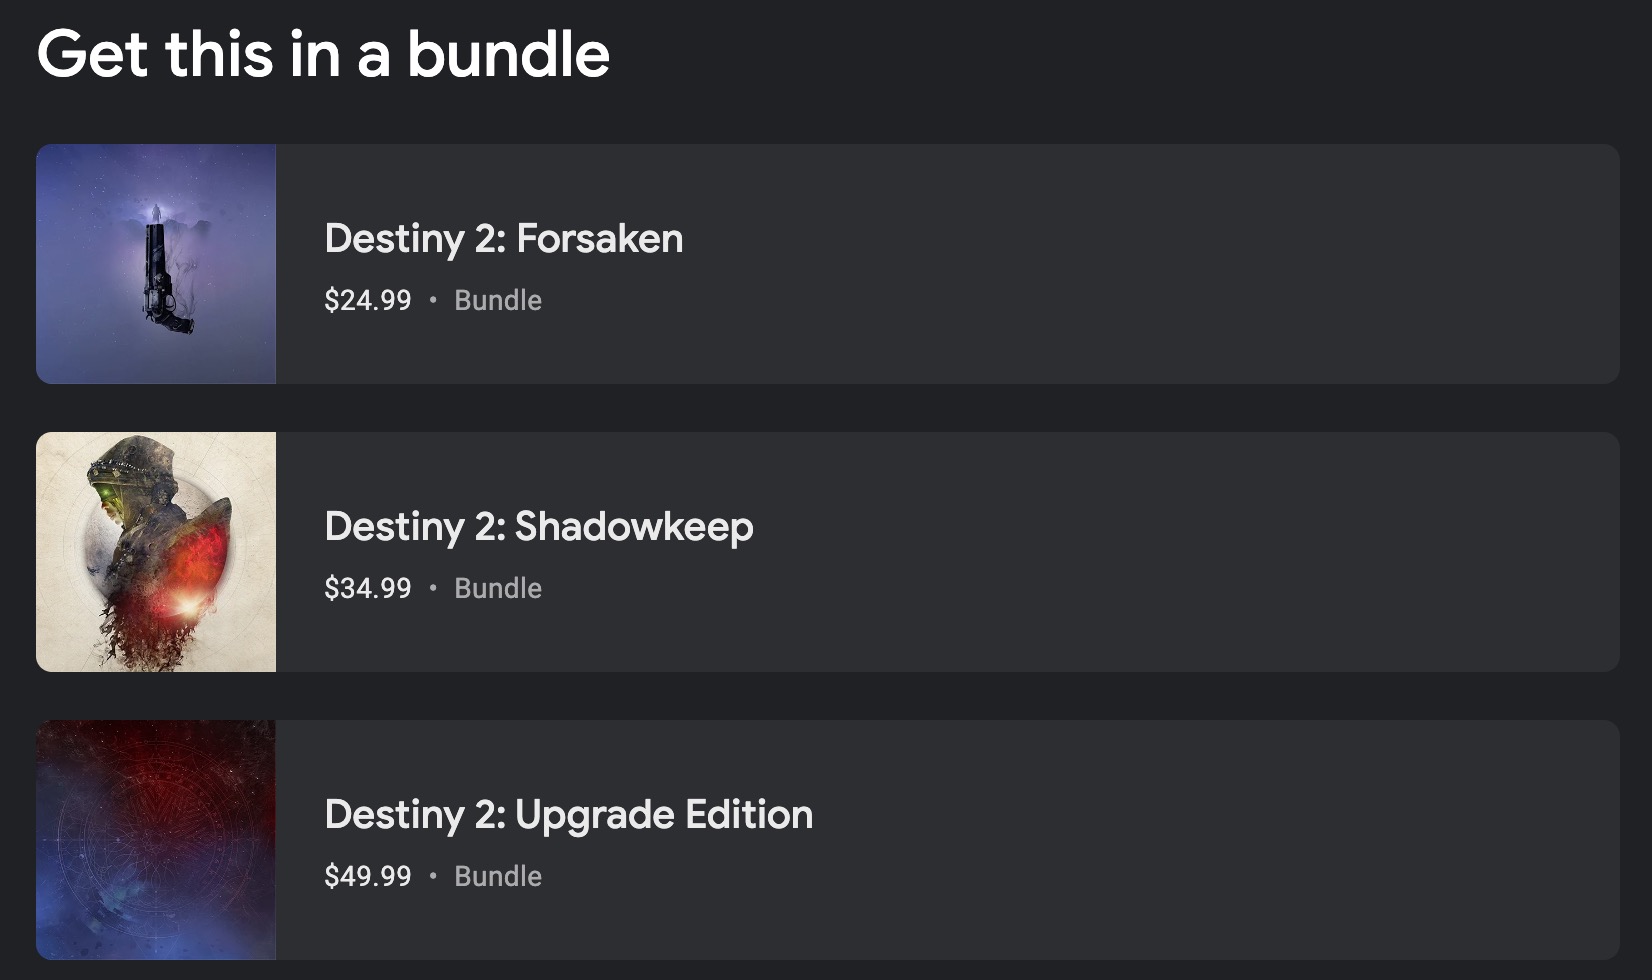 destiny 2 base game + expansion pass bundle does it include